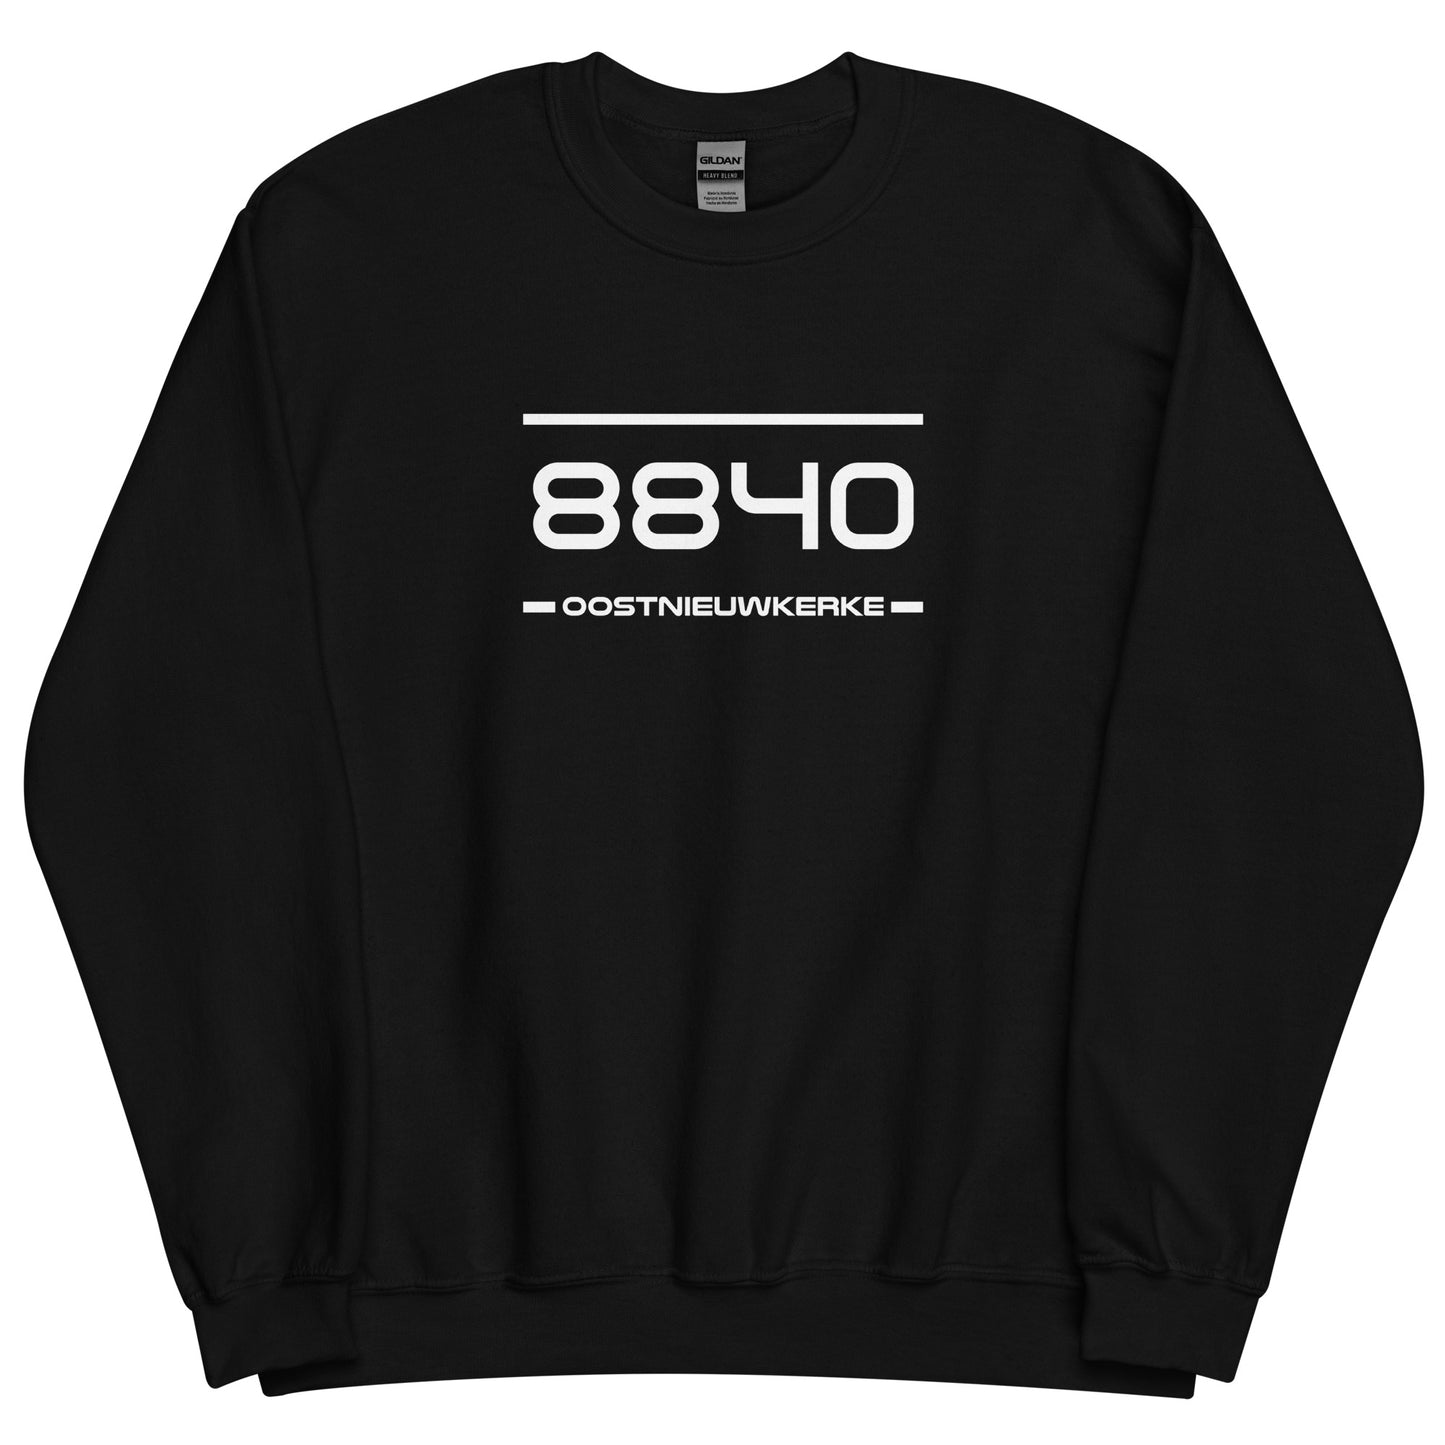 Sweater - 8840 - Oostnieuwkerke (M/V)